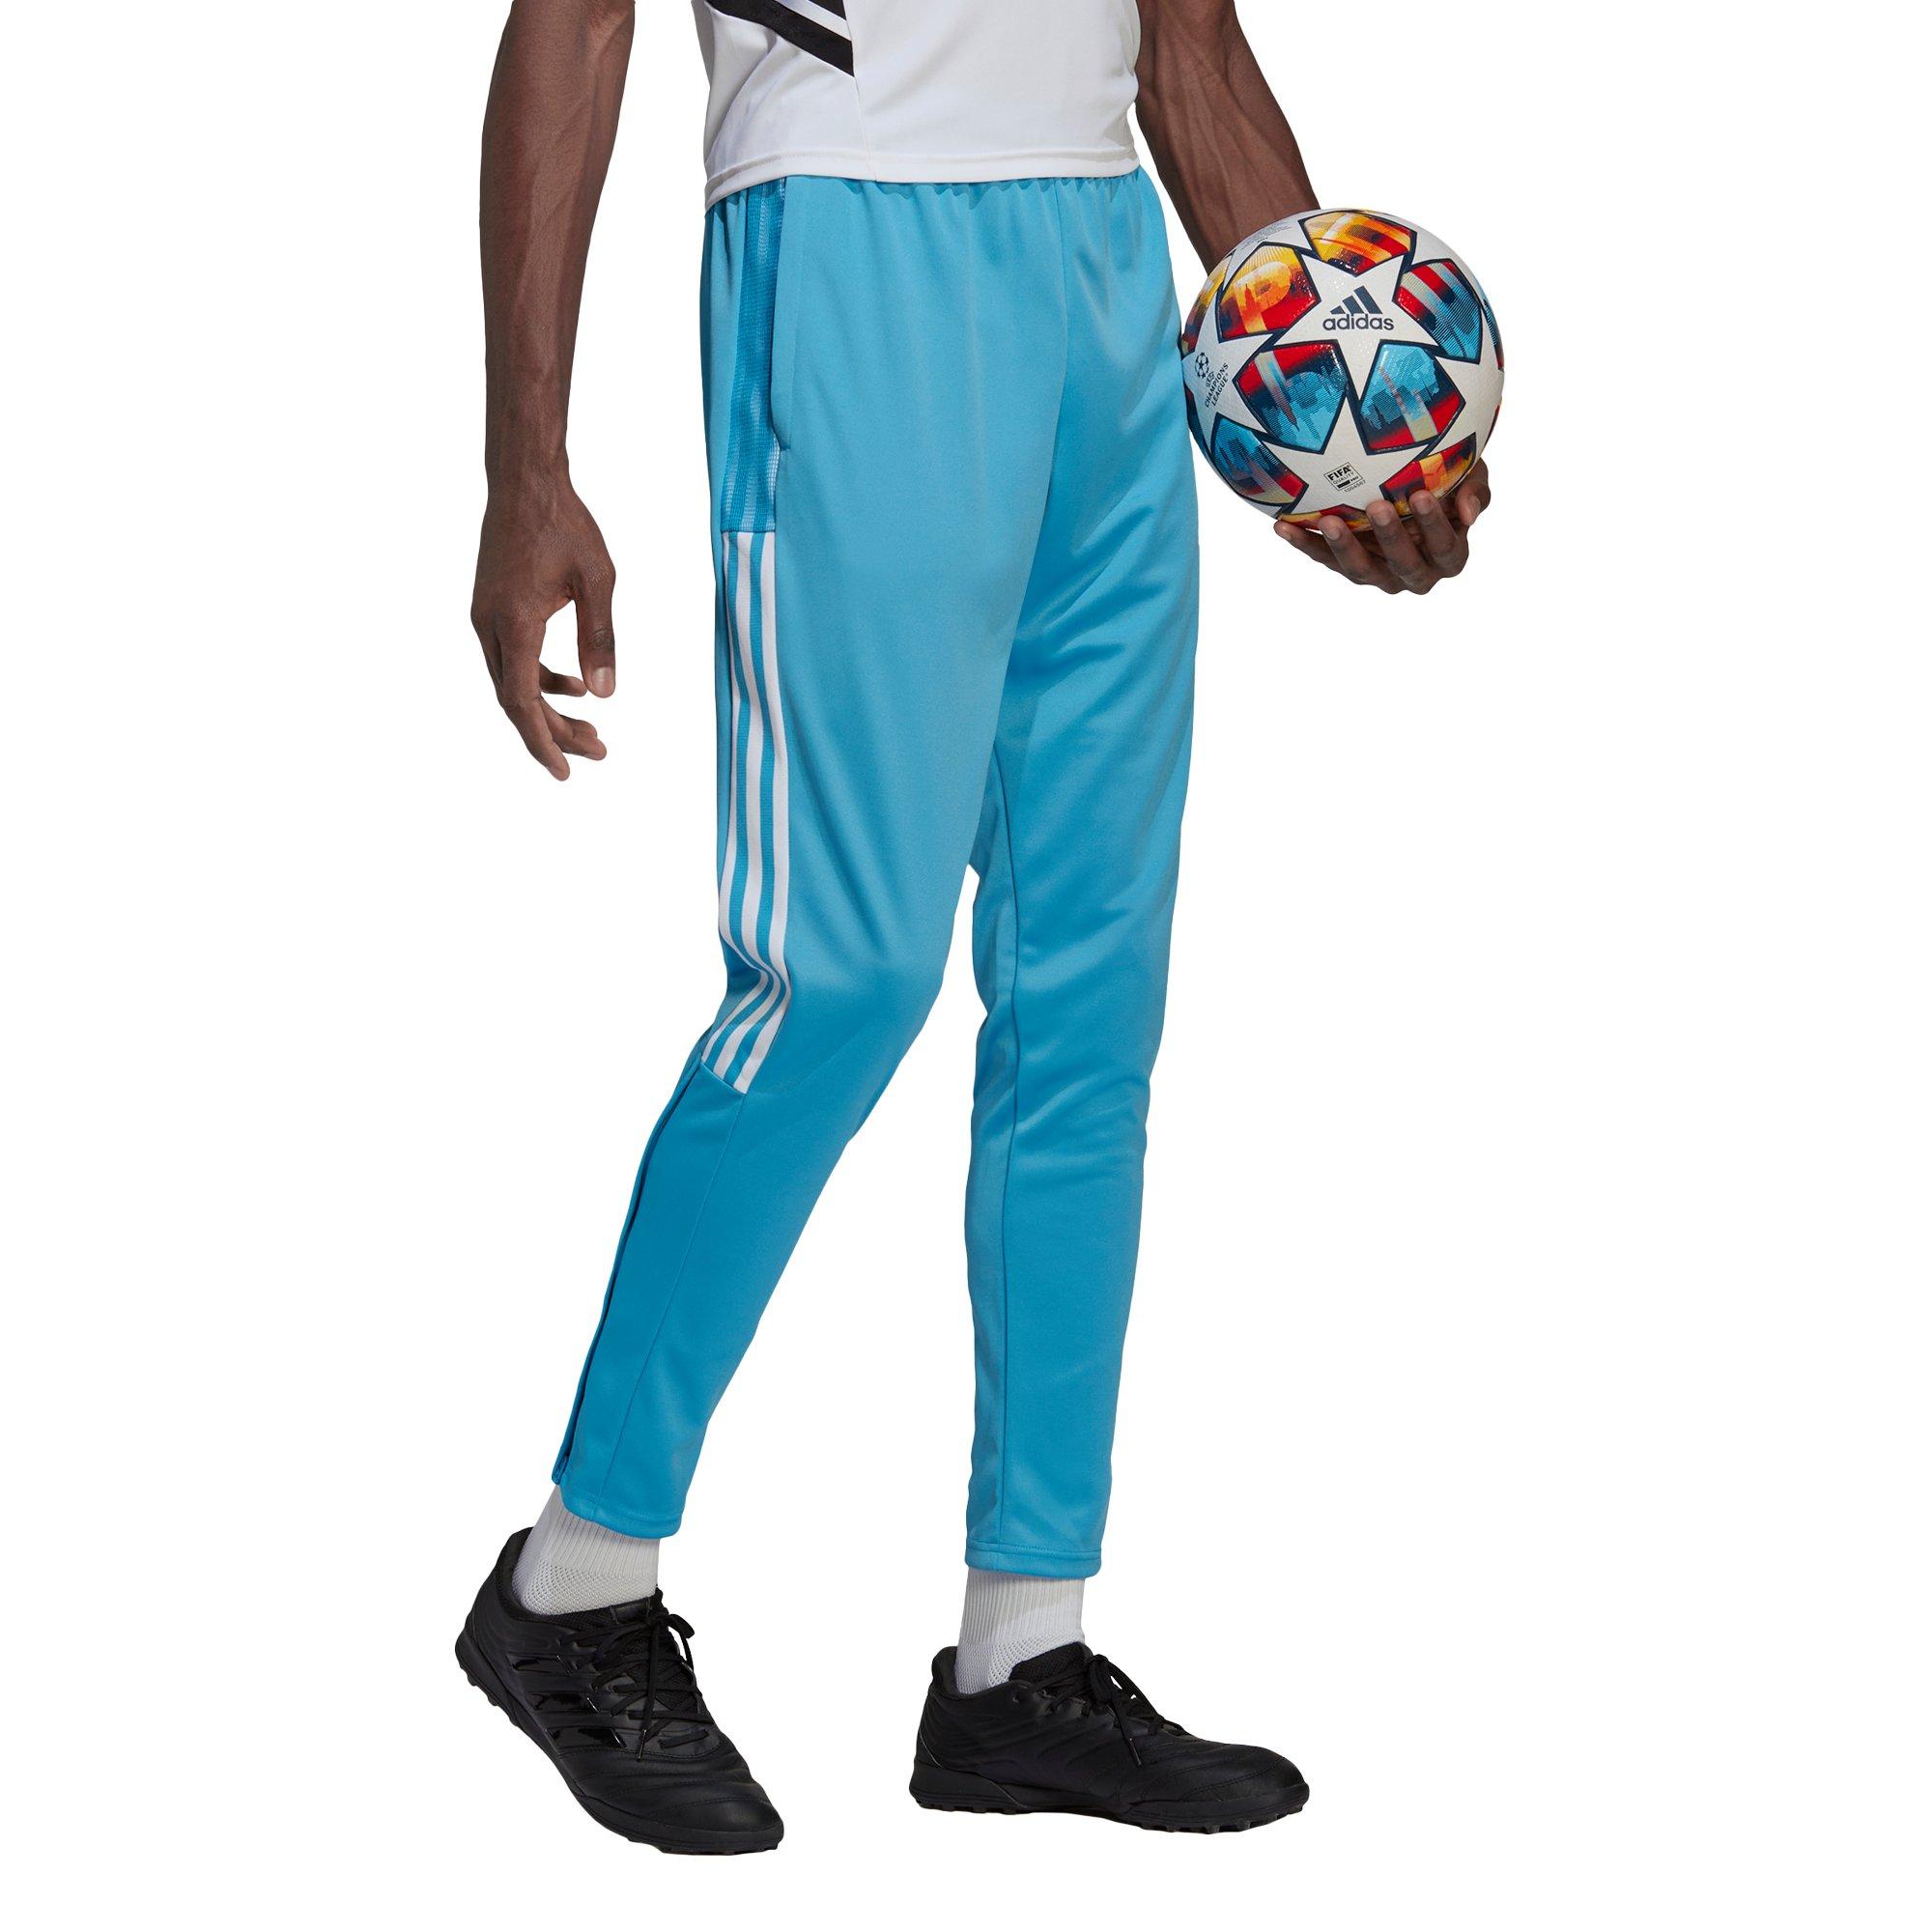  Adidas Soccer Pants